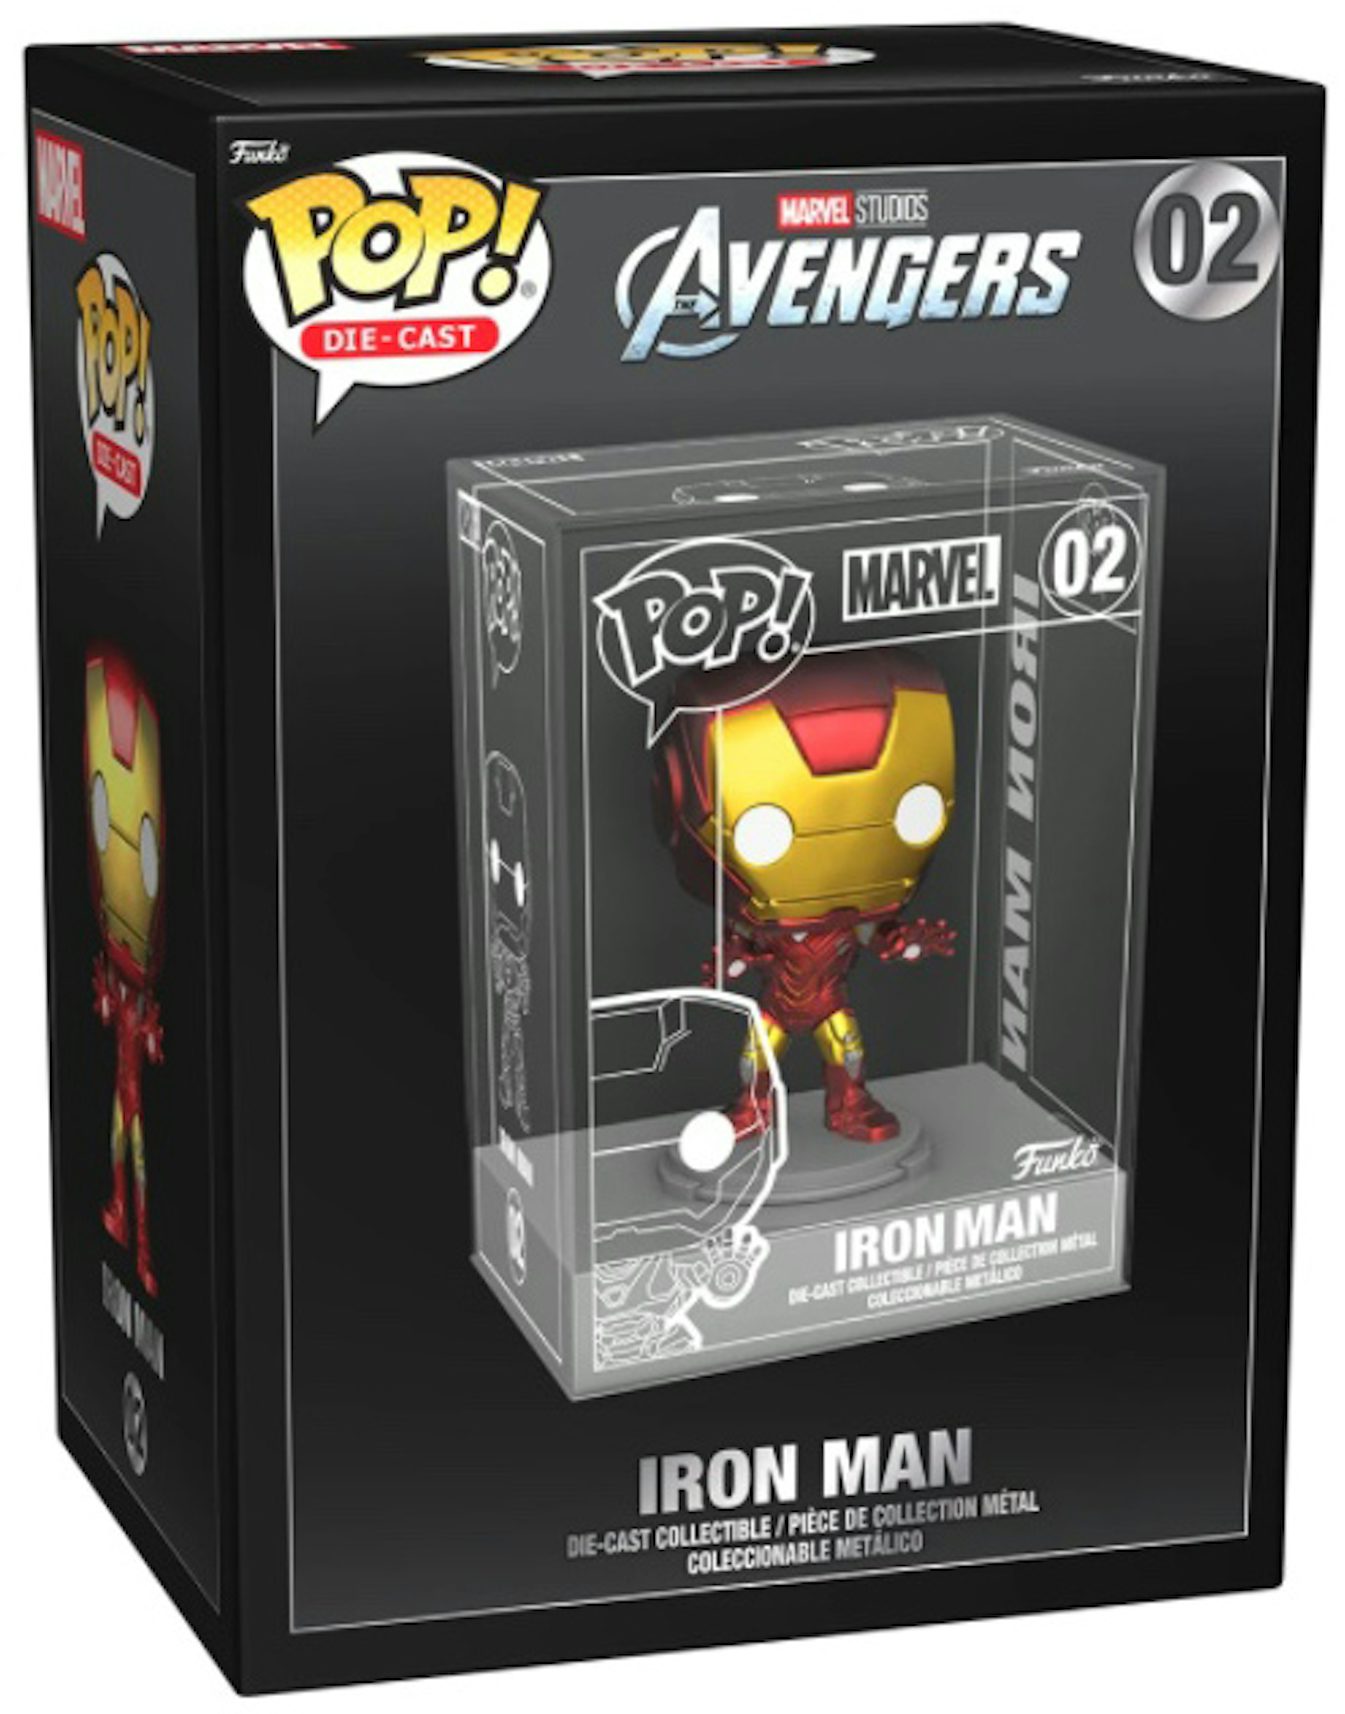 Funko Pop! Marvel Avengers End Game Iron Man 18 Inch Funko Shop Exclusive  Figure #02 - FW21 - US